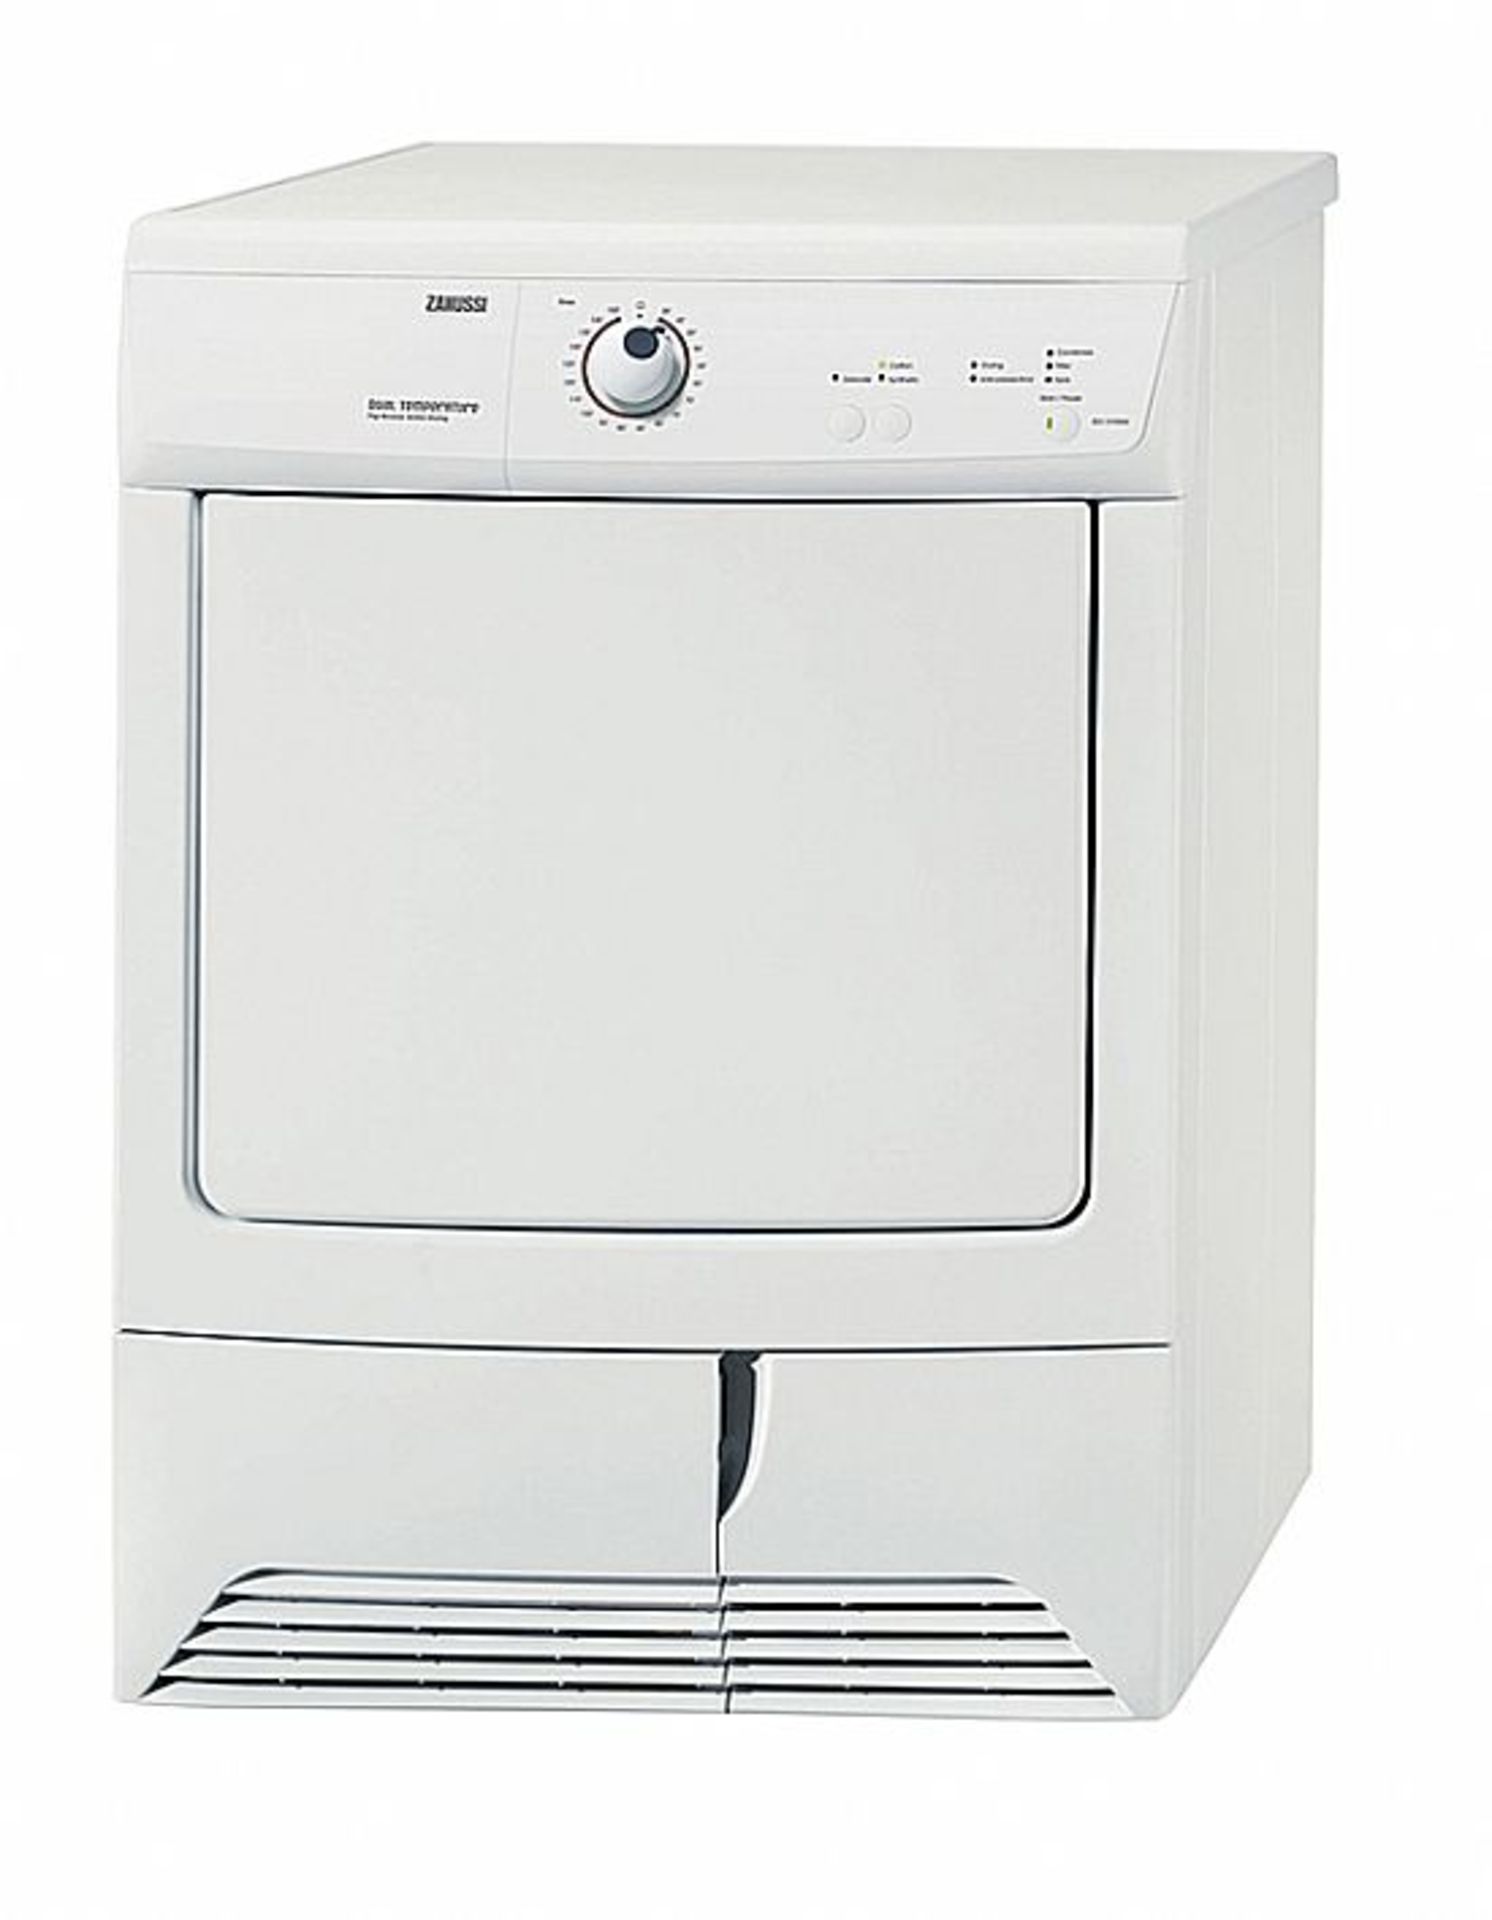 Grade A Zanussi Dual Temperature Washing Machine Model 37200W